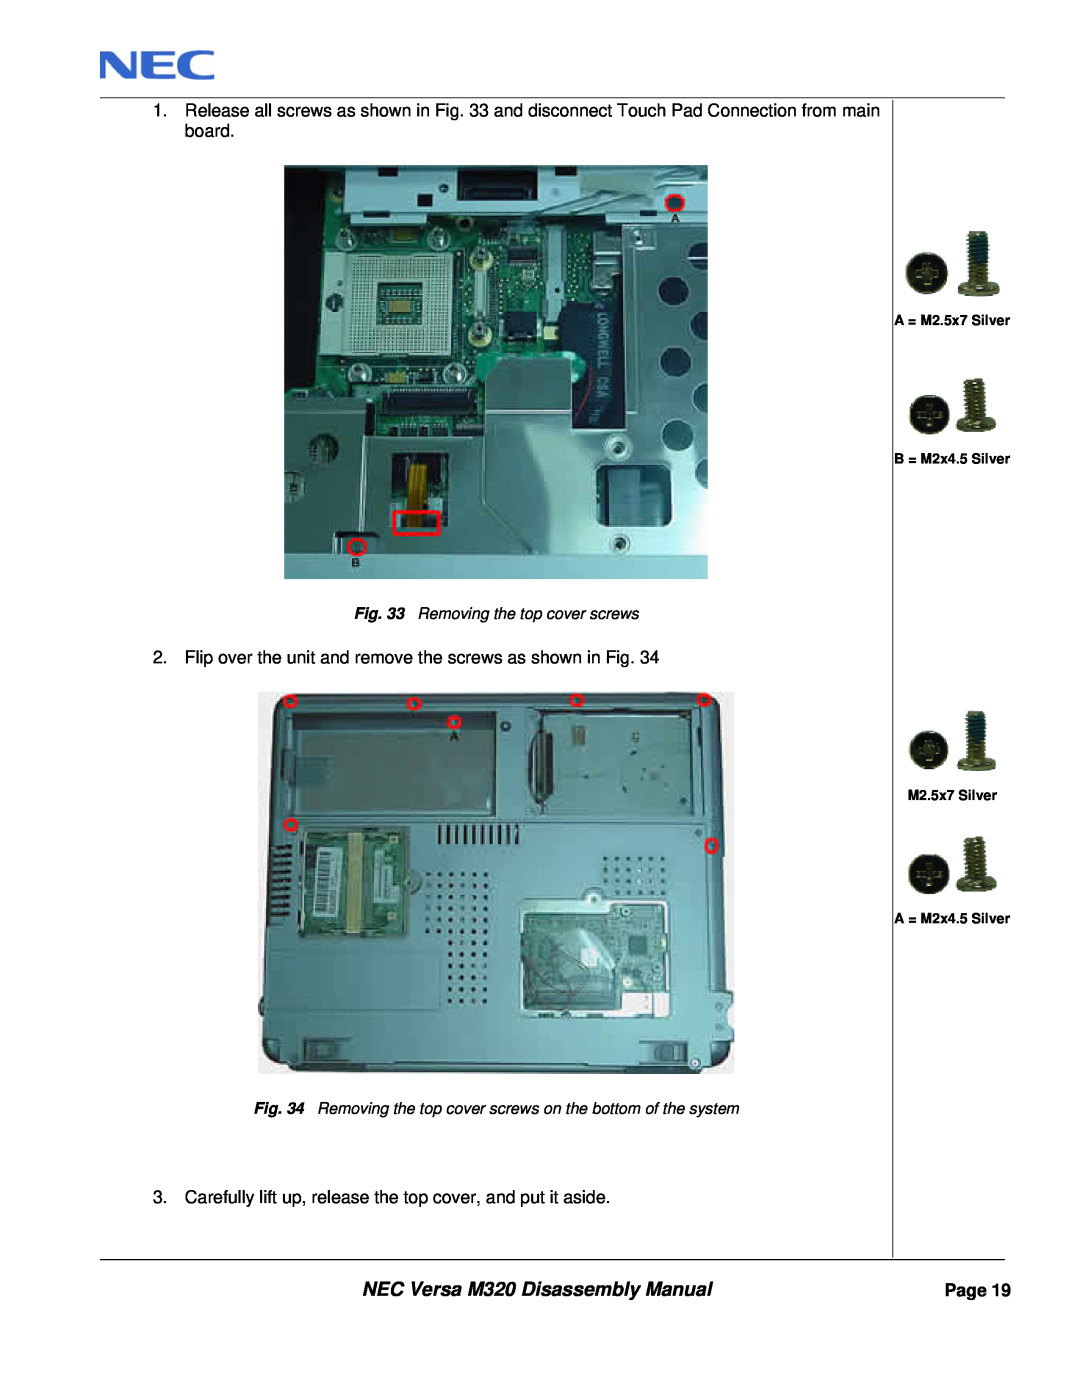 NEC NEC Versa M320 Disassembly Manual, Removing the top cover screws, A = M2.5x7 Silver B = M2x4.5 Silver M2.5x7 Silver 